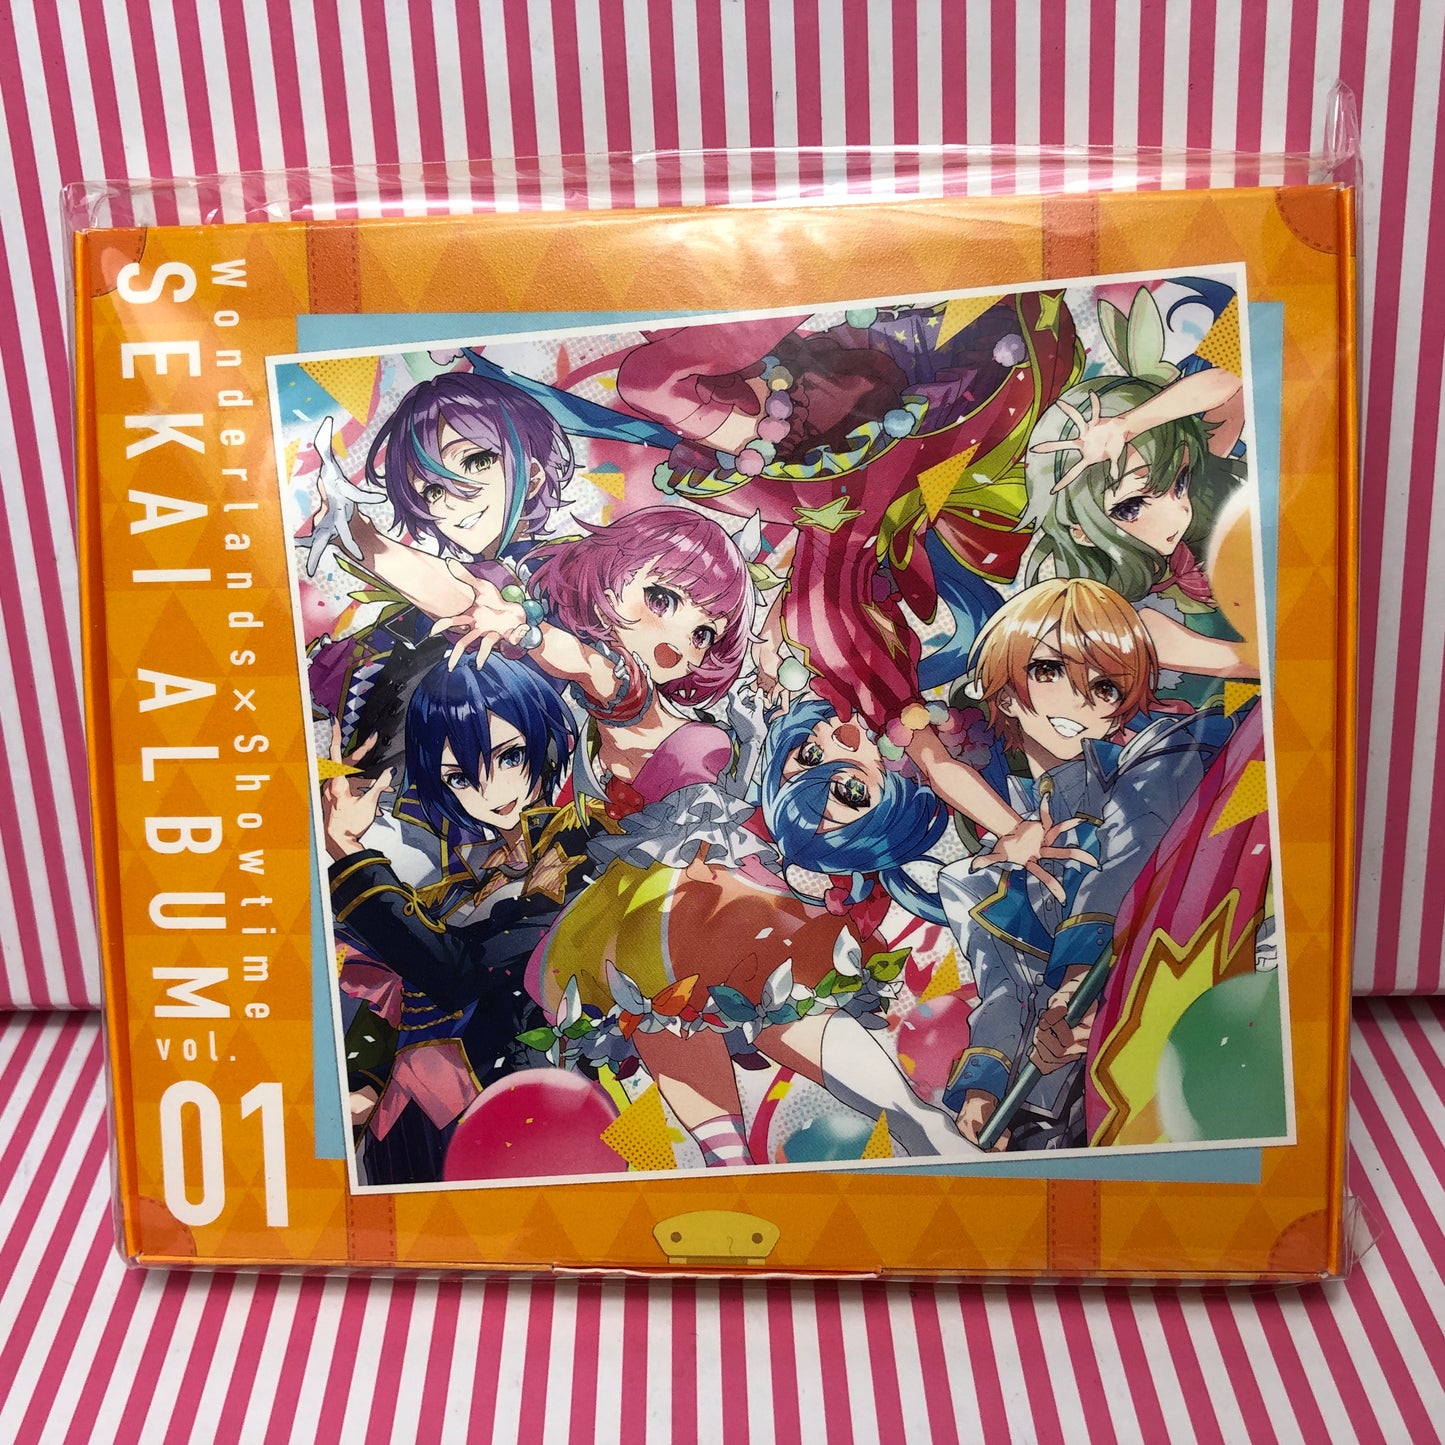 Project Sekai Colorful Stage! ft. Hatsune Miku Wonderlands x Showtime Sekai Album Vol. 1 [First Press Ed.] (CD + Soporte Acrílico + Pegatina)